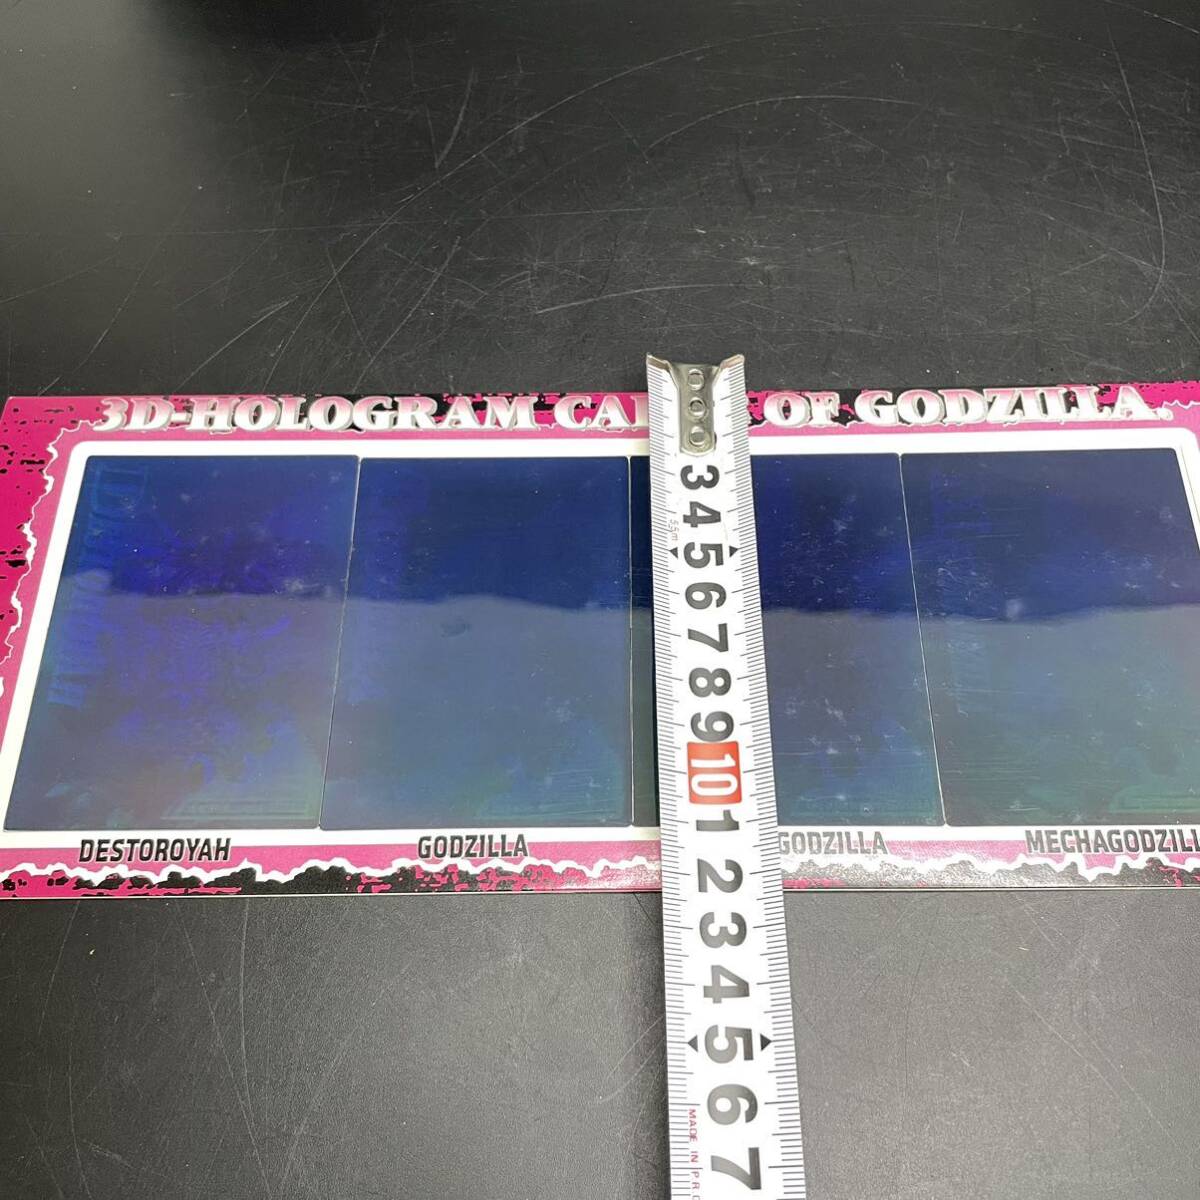 4 sheets summarize DESTOROYAH/GODZILLA/SPACEGODZILLA/MECHAGODZALLA Amada Godzilla trading collection Godzilla 3D tent card 